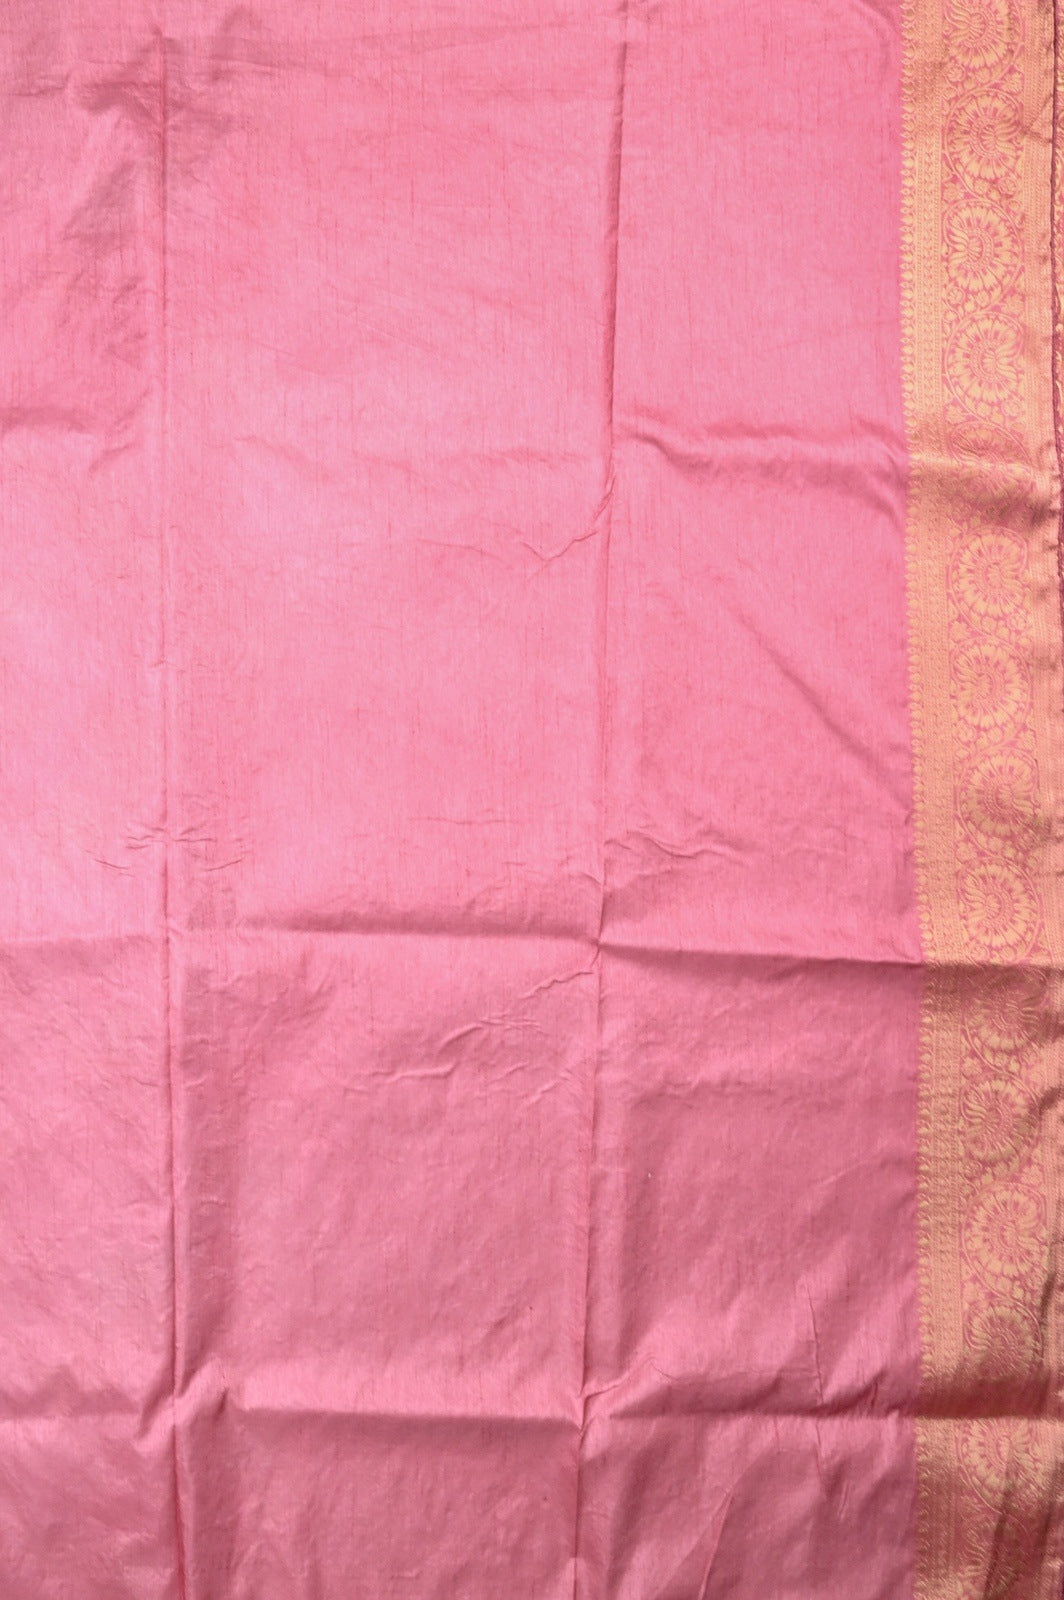 Dola silk saree light onion pink color with allover zari work, rich pallu, small zari border and running plain blouse.